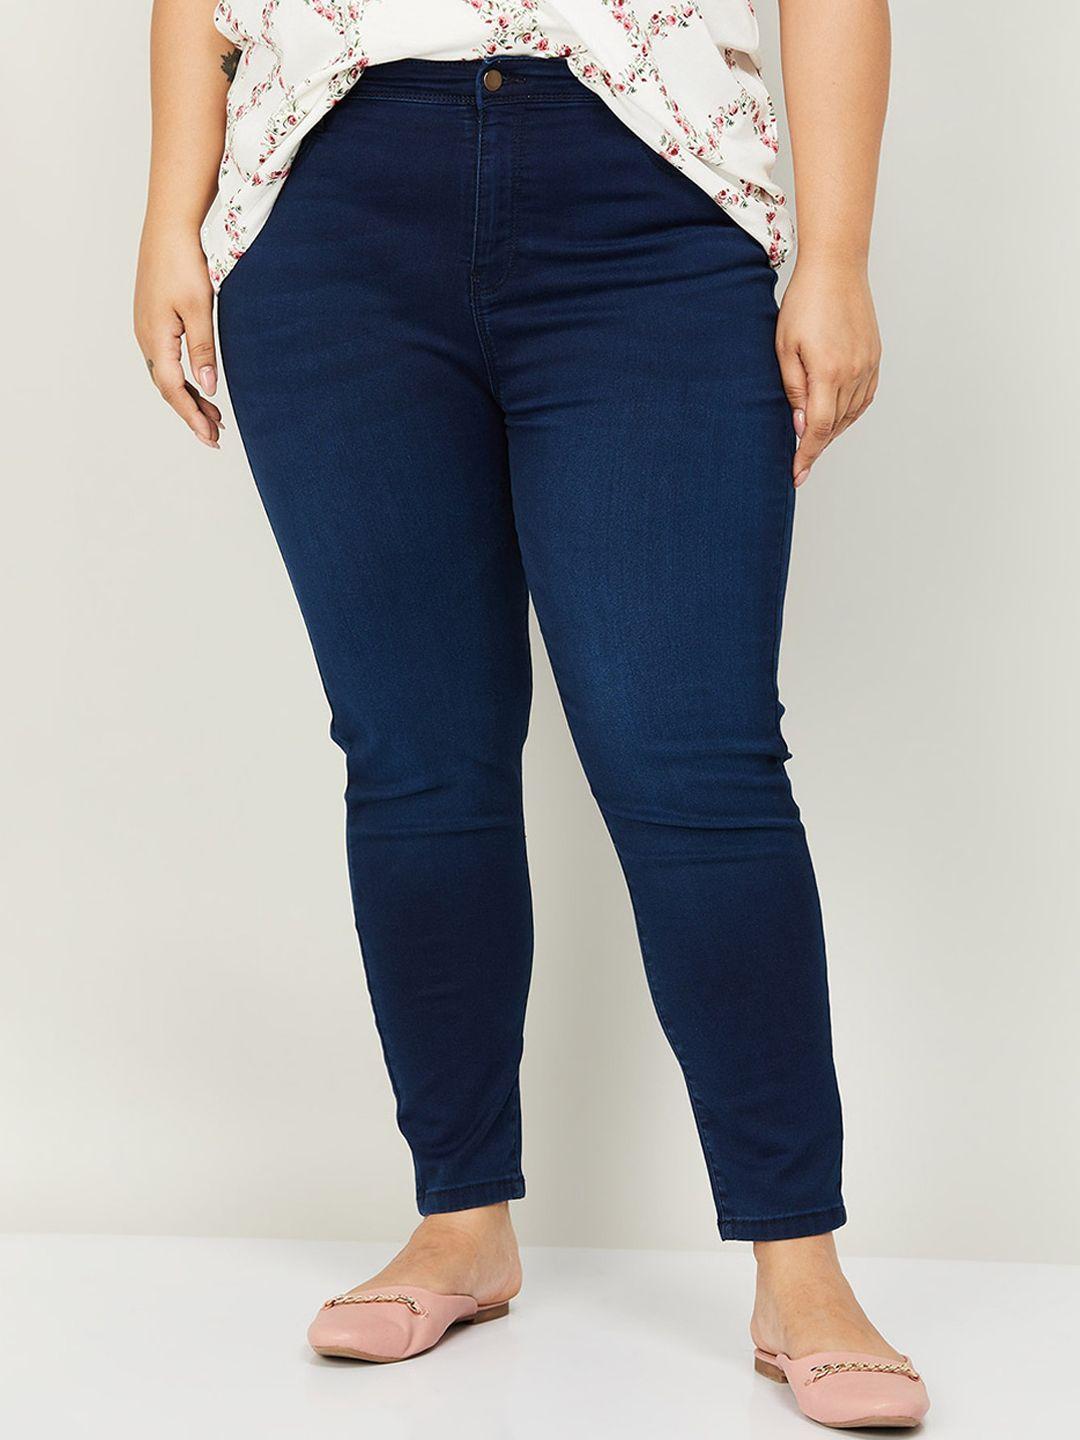 nexus women plus size skinny fit light fade cotton jeans